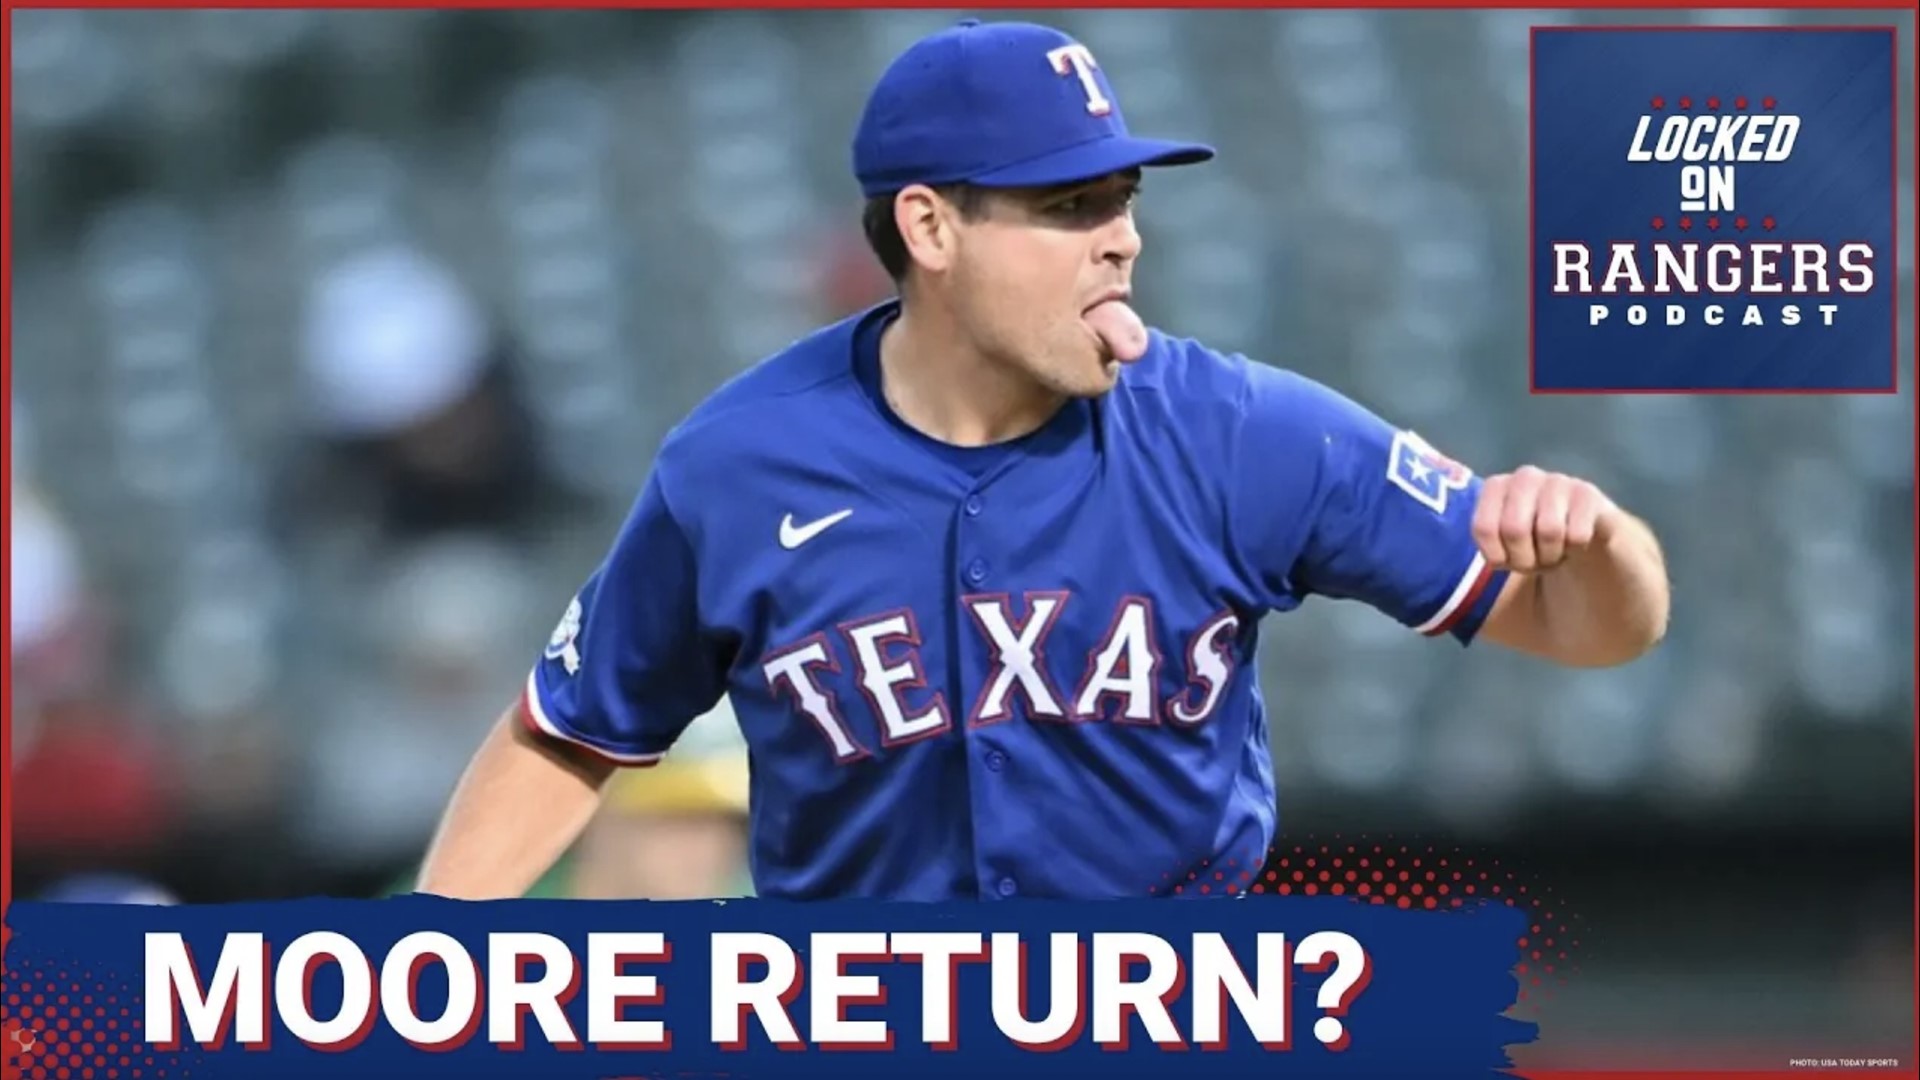 Texas Rangers - Update your phone wallpaper accordingly.